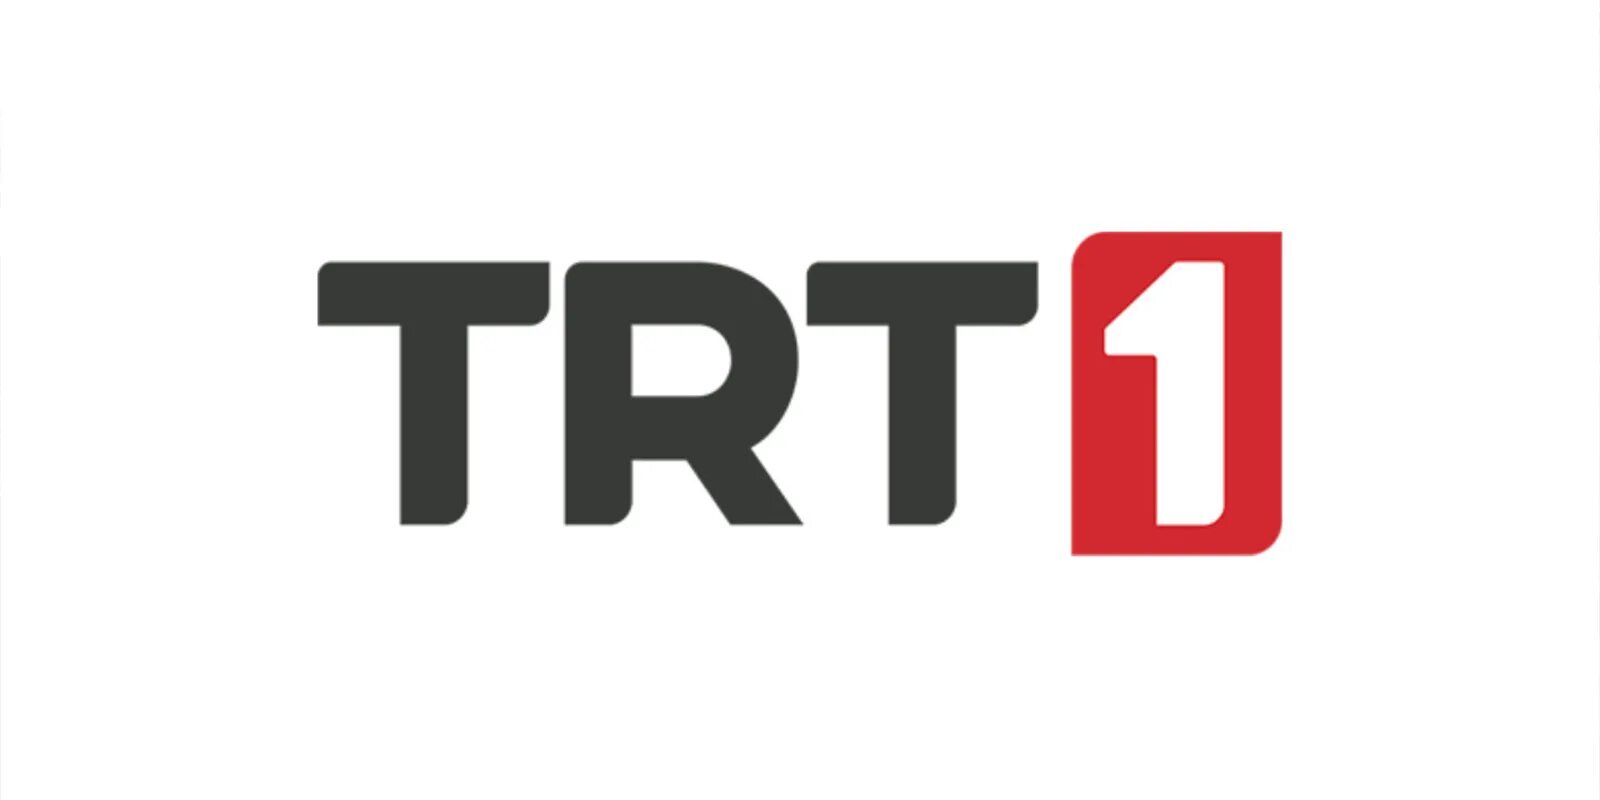 Trt canlı yayın. TRT 1. TRT 1 logo. Телеканал TRT. Канал trt1 ТВ Турция.